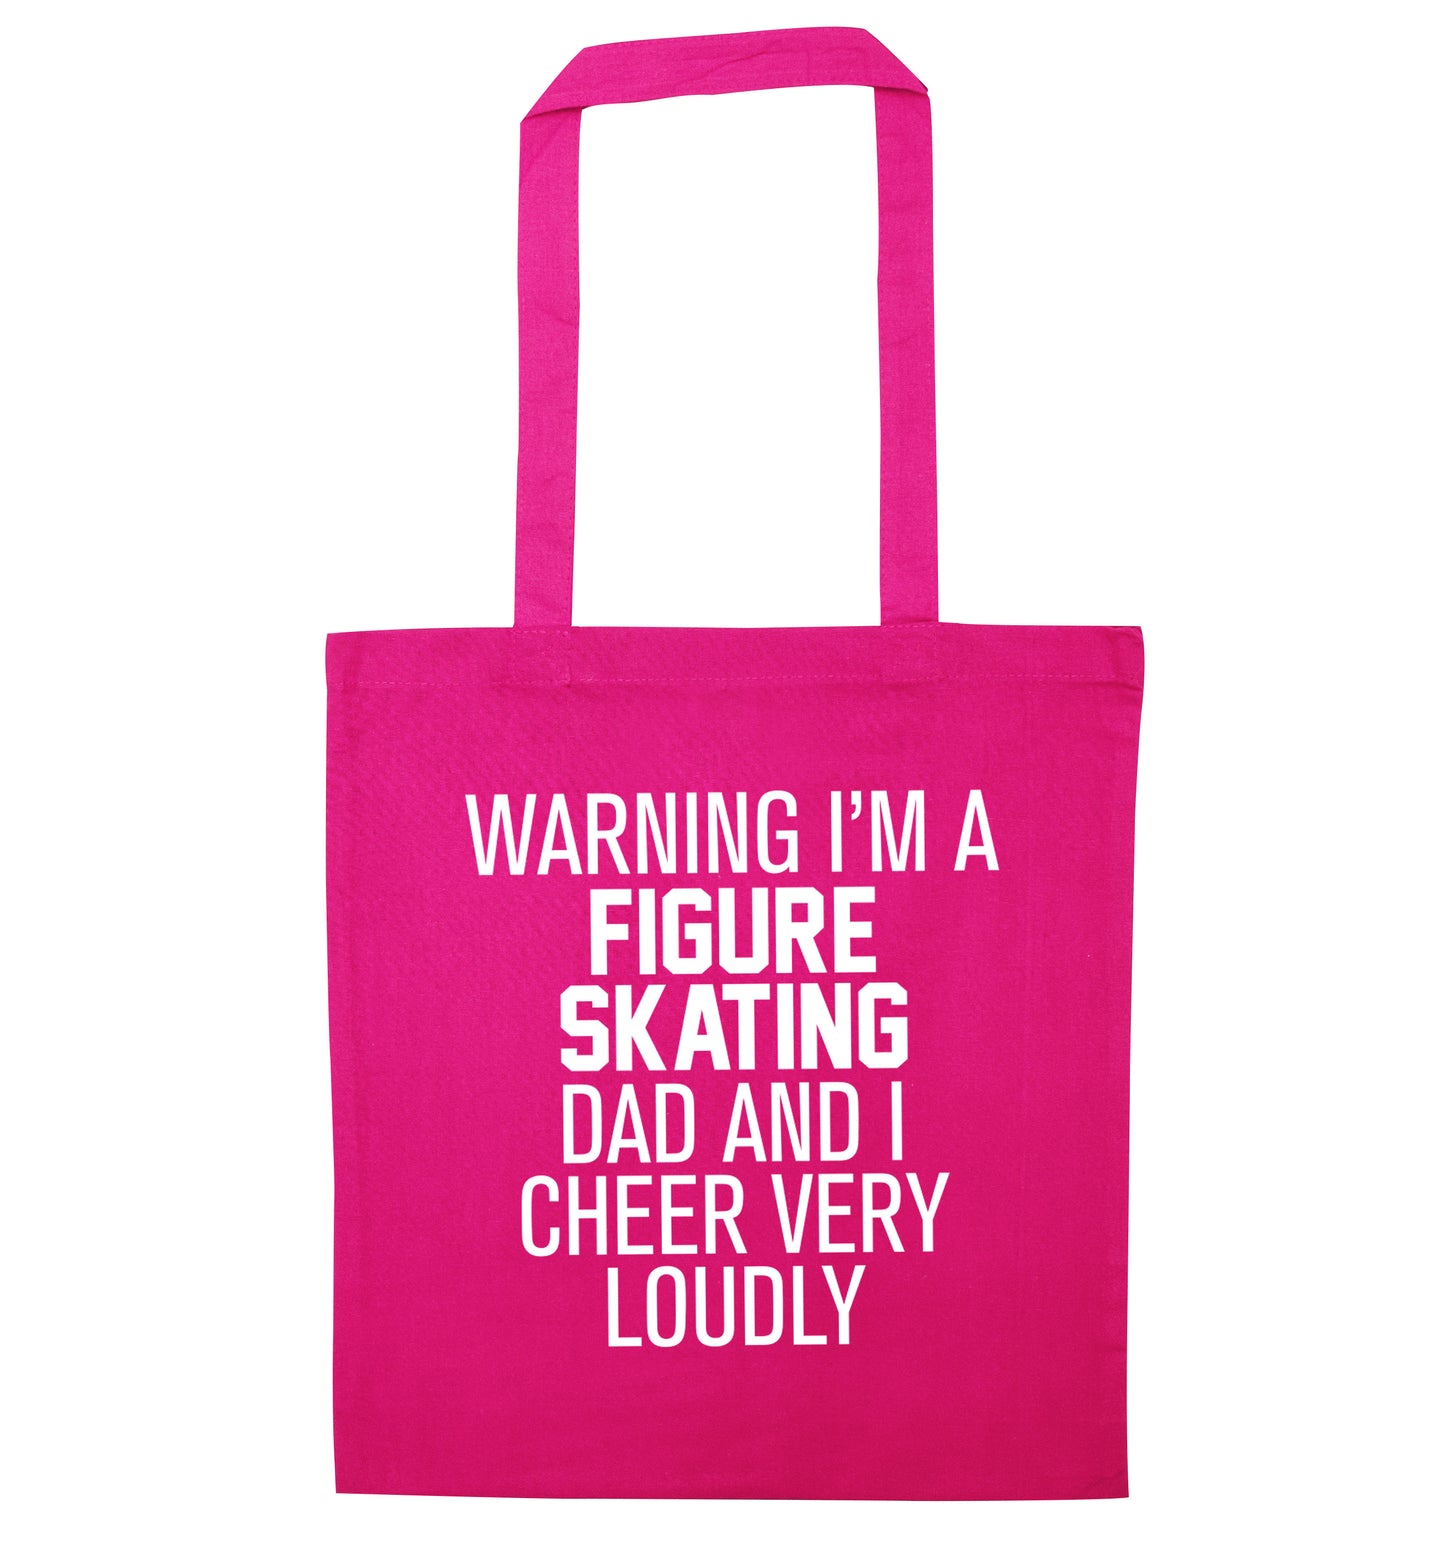 Warning I'm a figure skating dad and I cheer very loudly pink tote bag